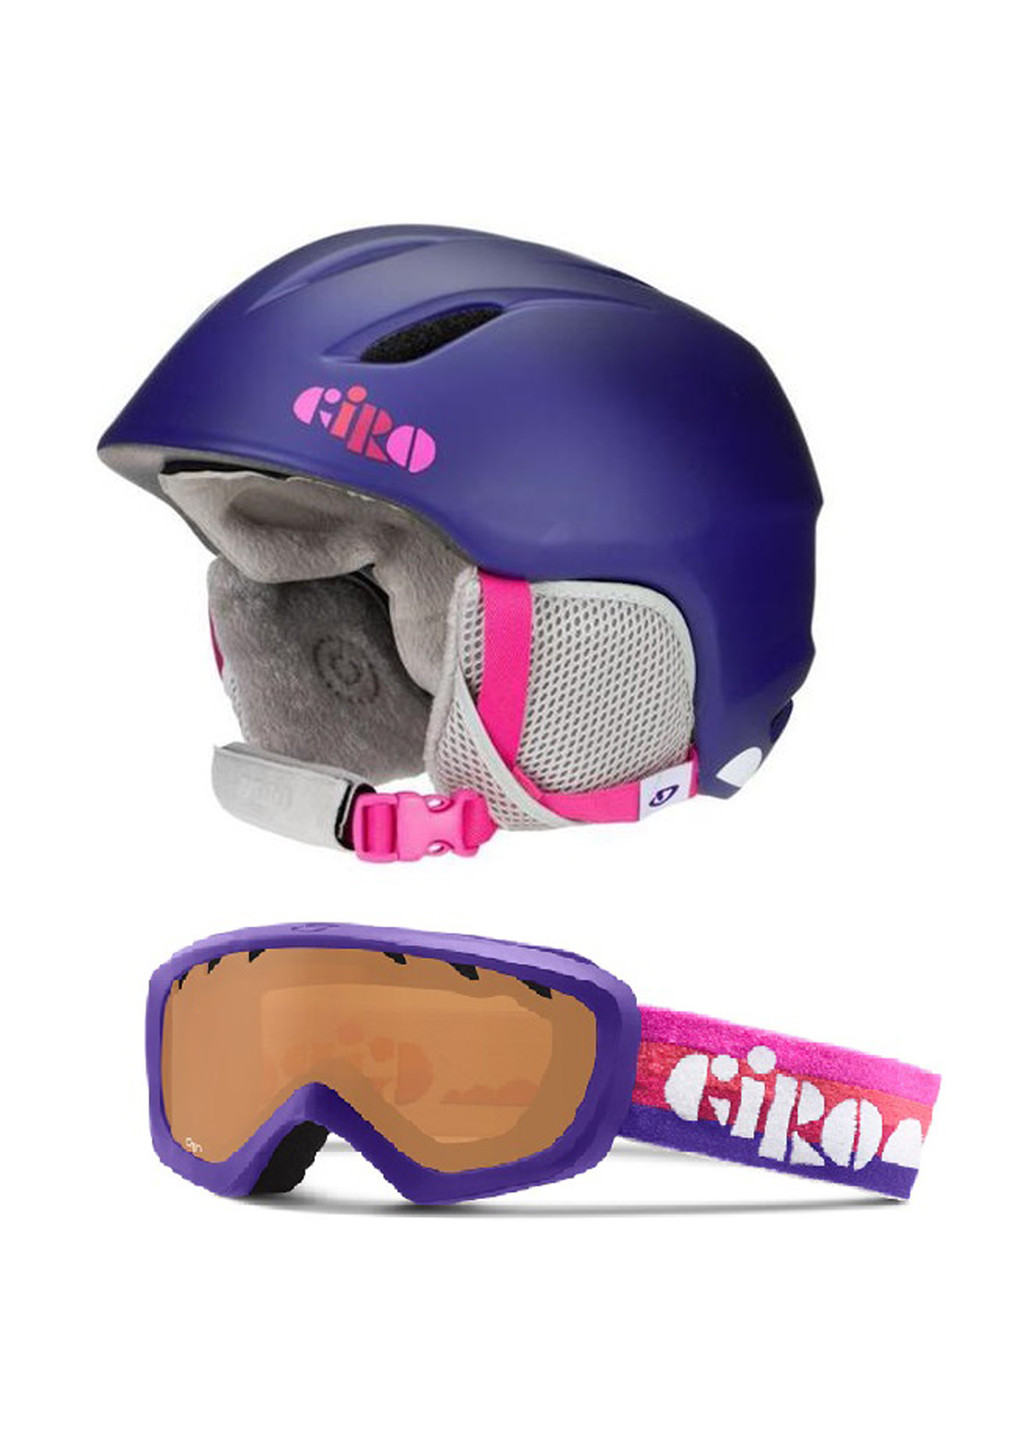 Комплект (шлем, маска) Giro giro launch (166853101)